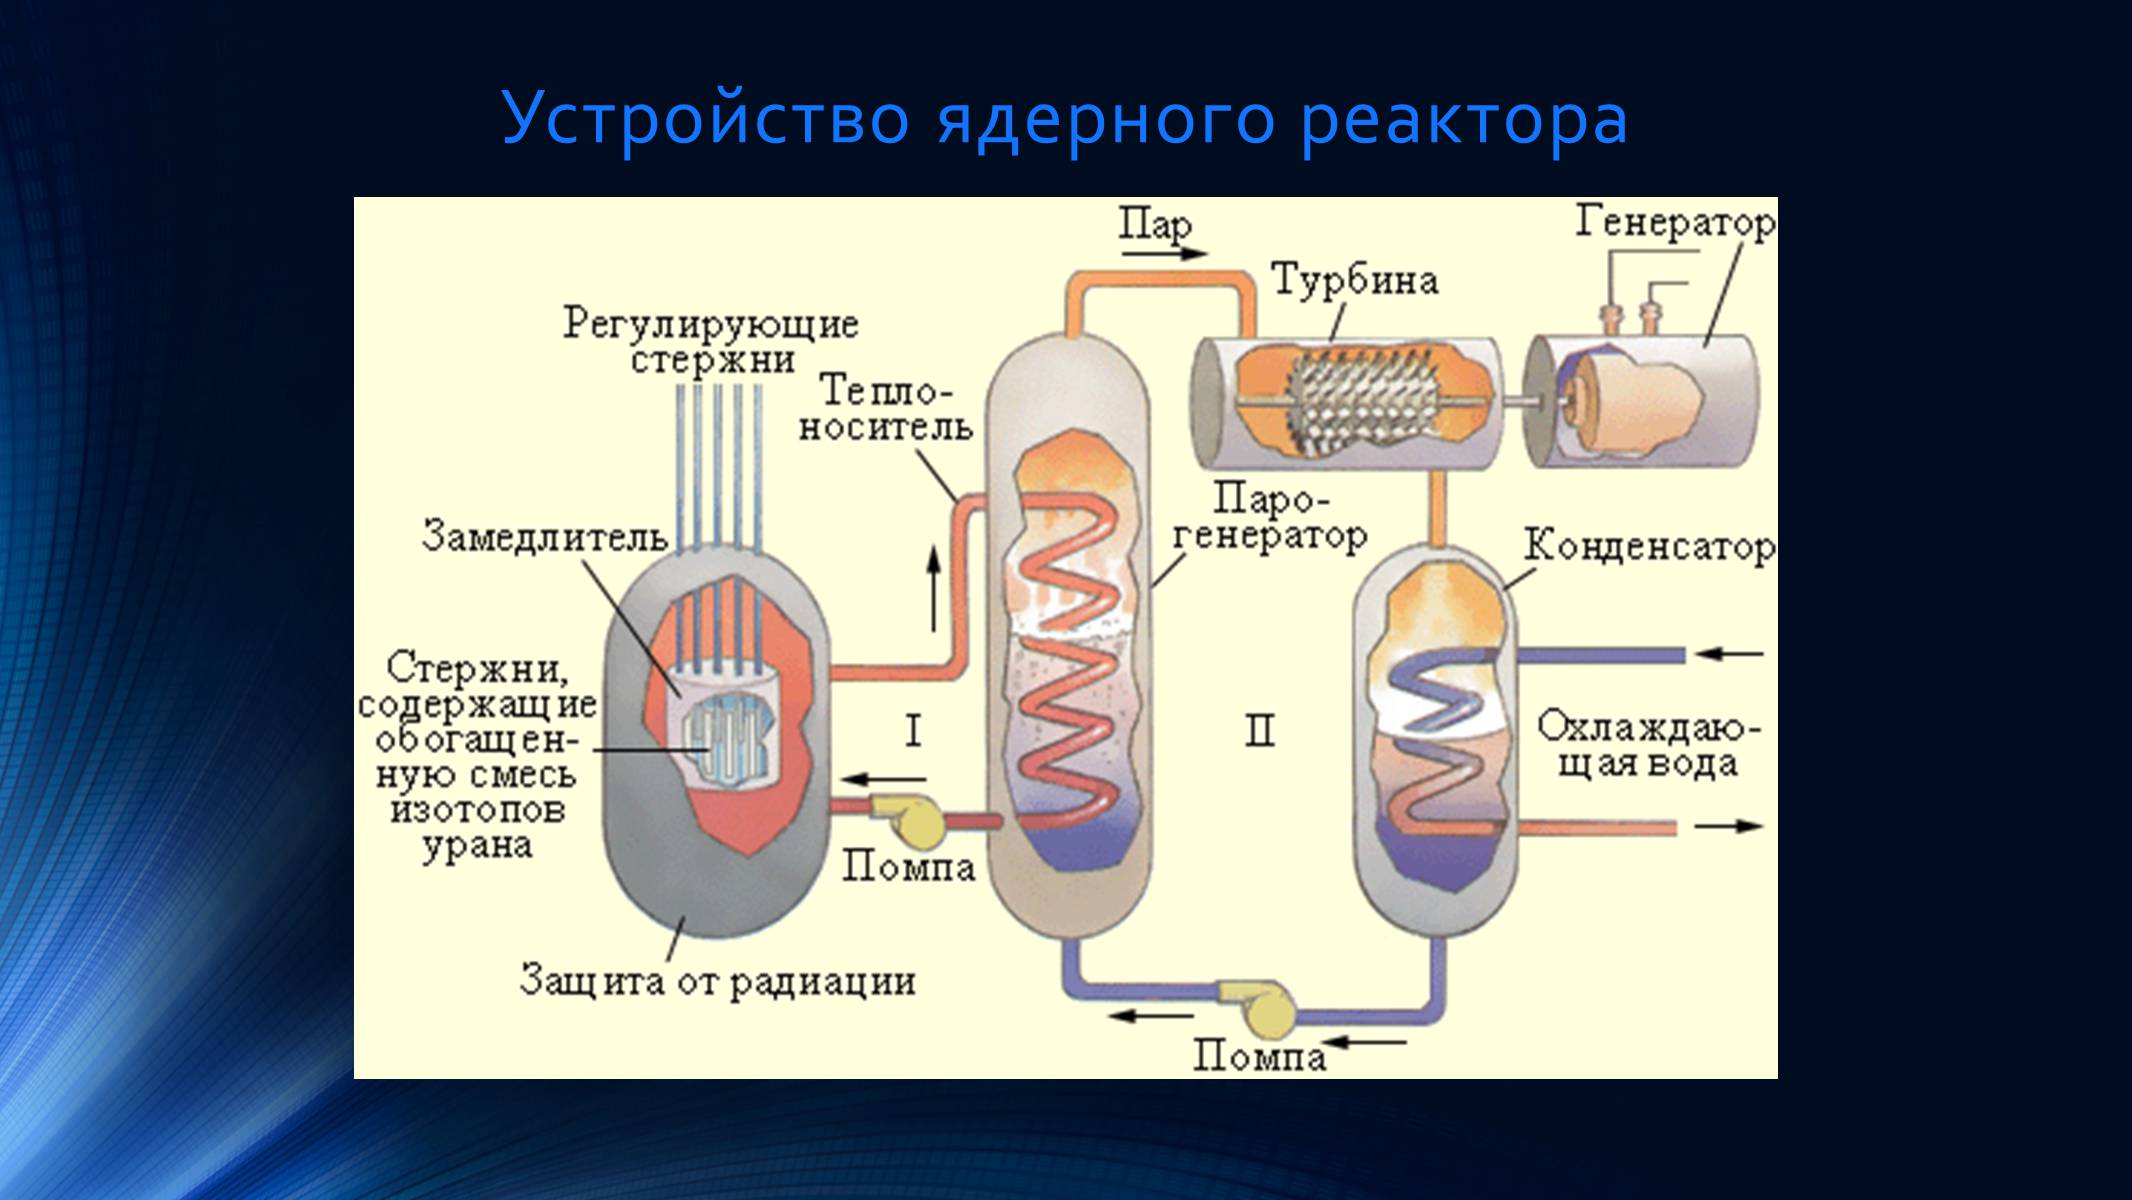 Презентація на тему «Типы ядерных реакторов» - Слайд #3